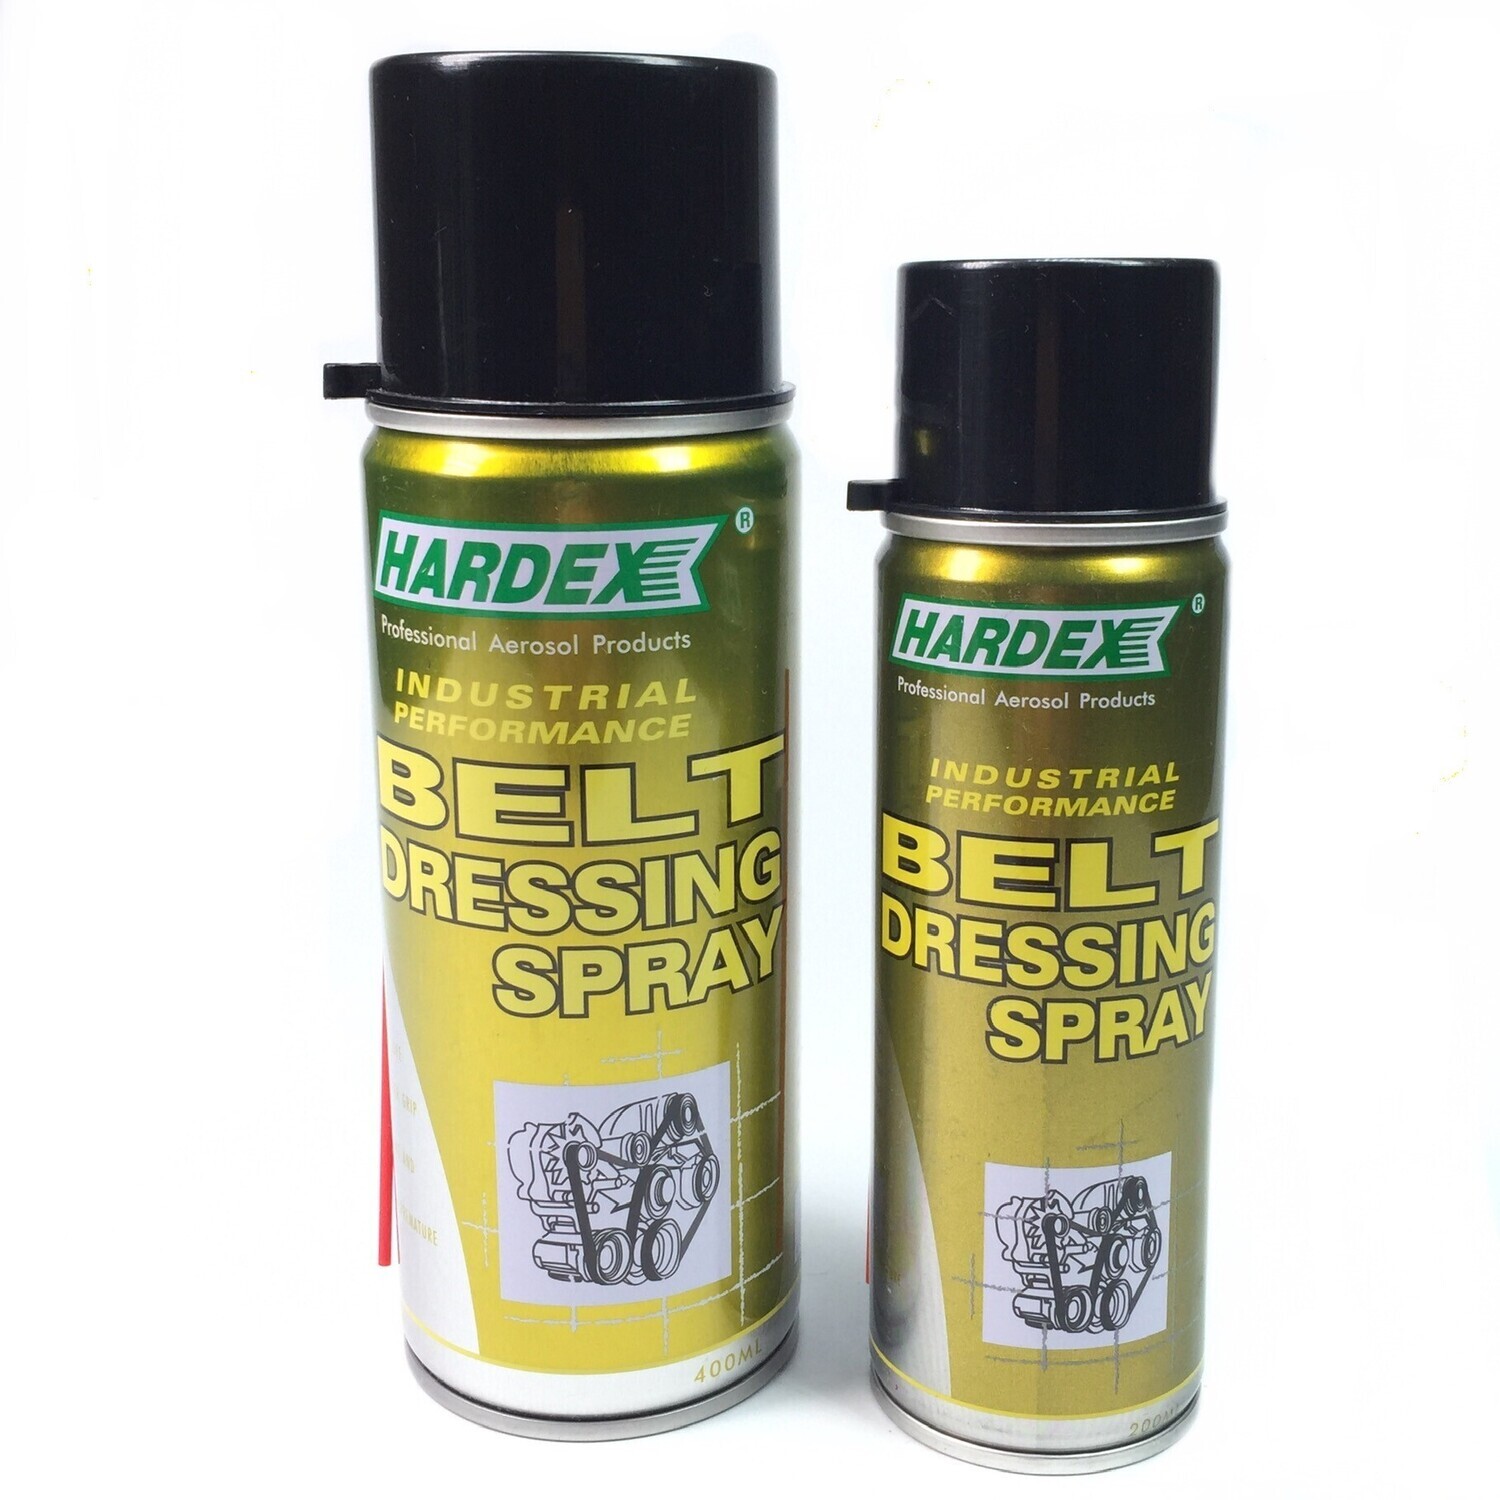 Hardex Belt Dressing Spray